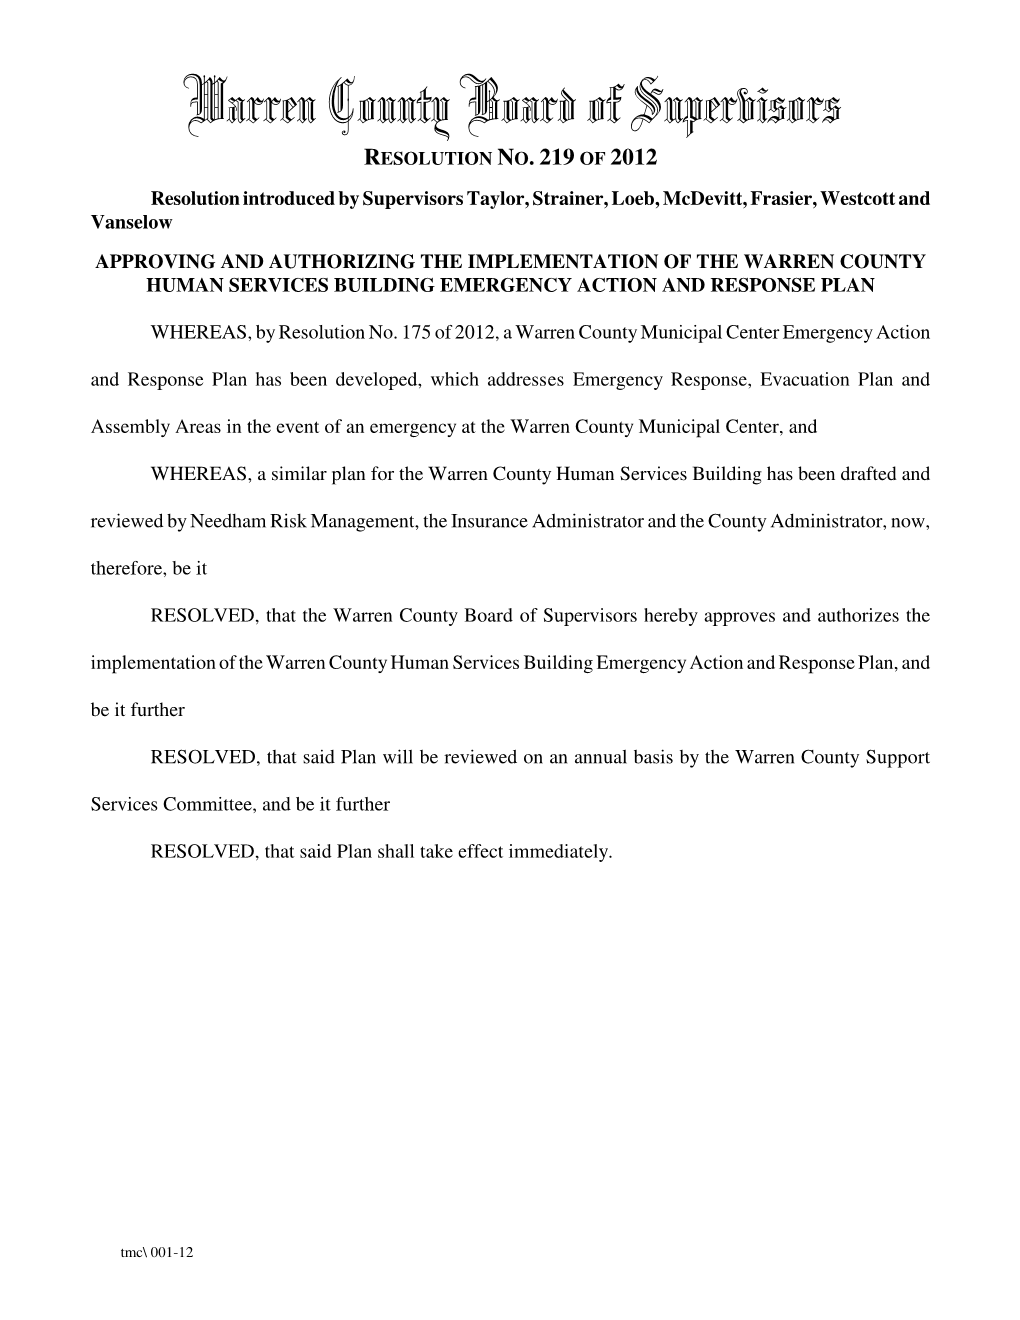 Warren County Board of Supervisors RESOLUTION NO